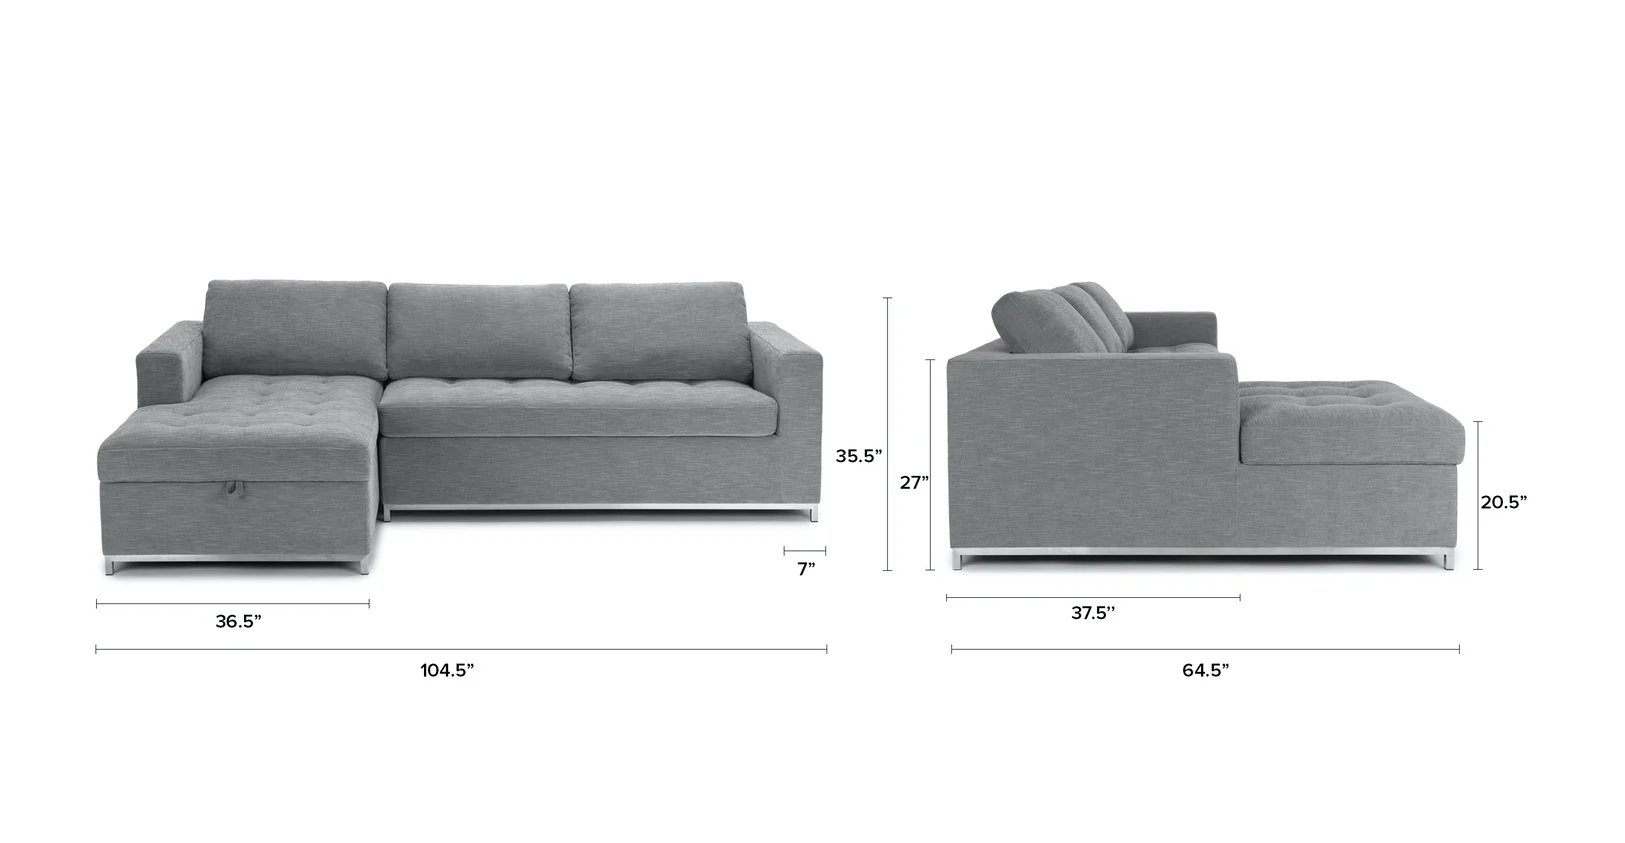 Soma Dawn Gray Left Sofa Bed - Image 4